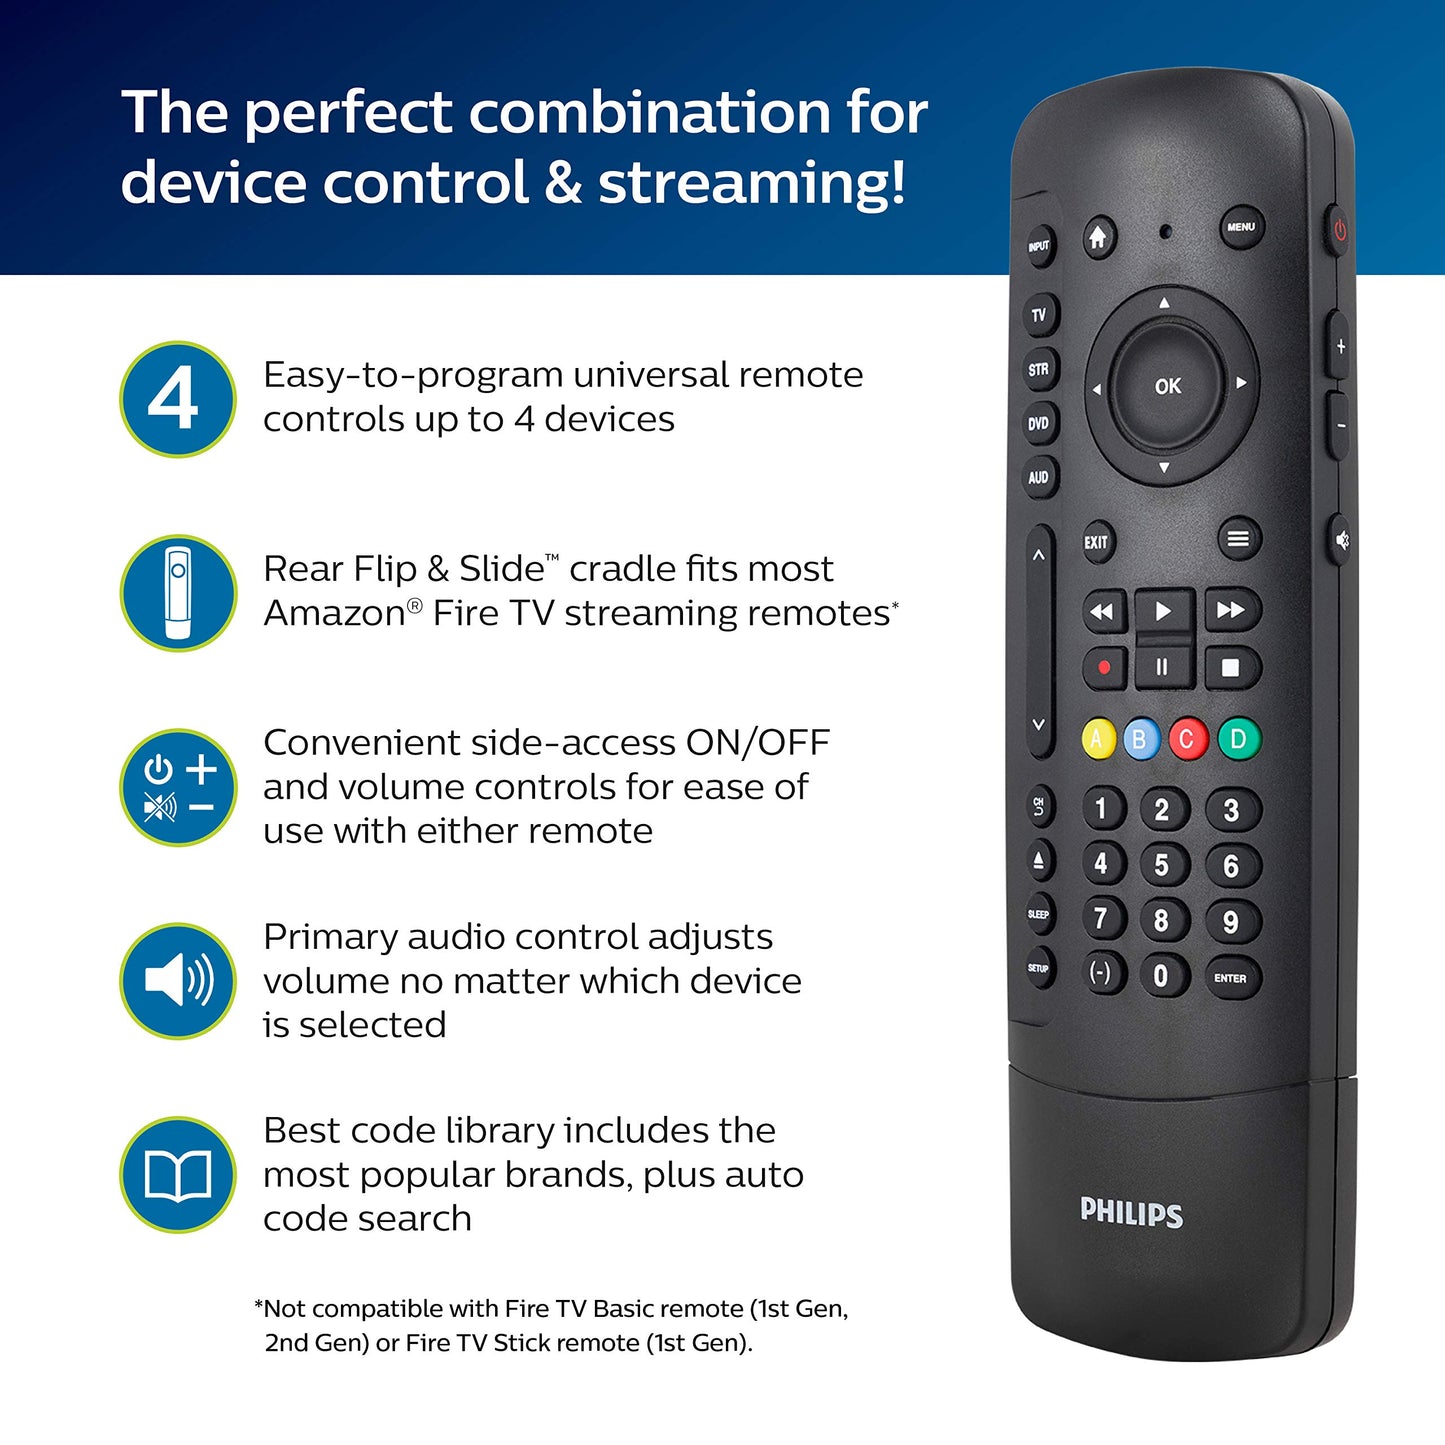 Philips Universal Companion Remote Control for Samsung, Vizio, LG, Sony, Roku, Apple TV, RCA, Panasonic, Smart TVs, Streaming Players, Blu-ray, DVD, 4 Device, Flip & Slide Fire TV, Black, SRP2024A/27